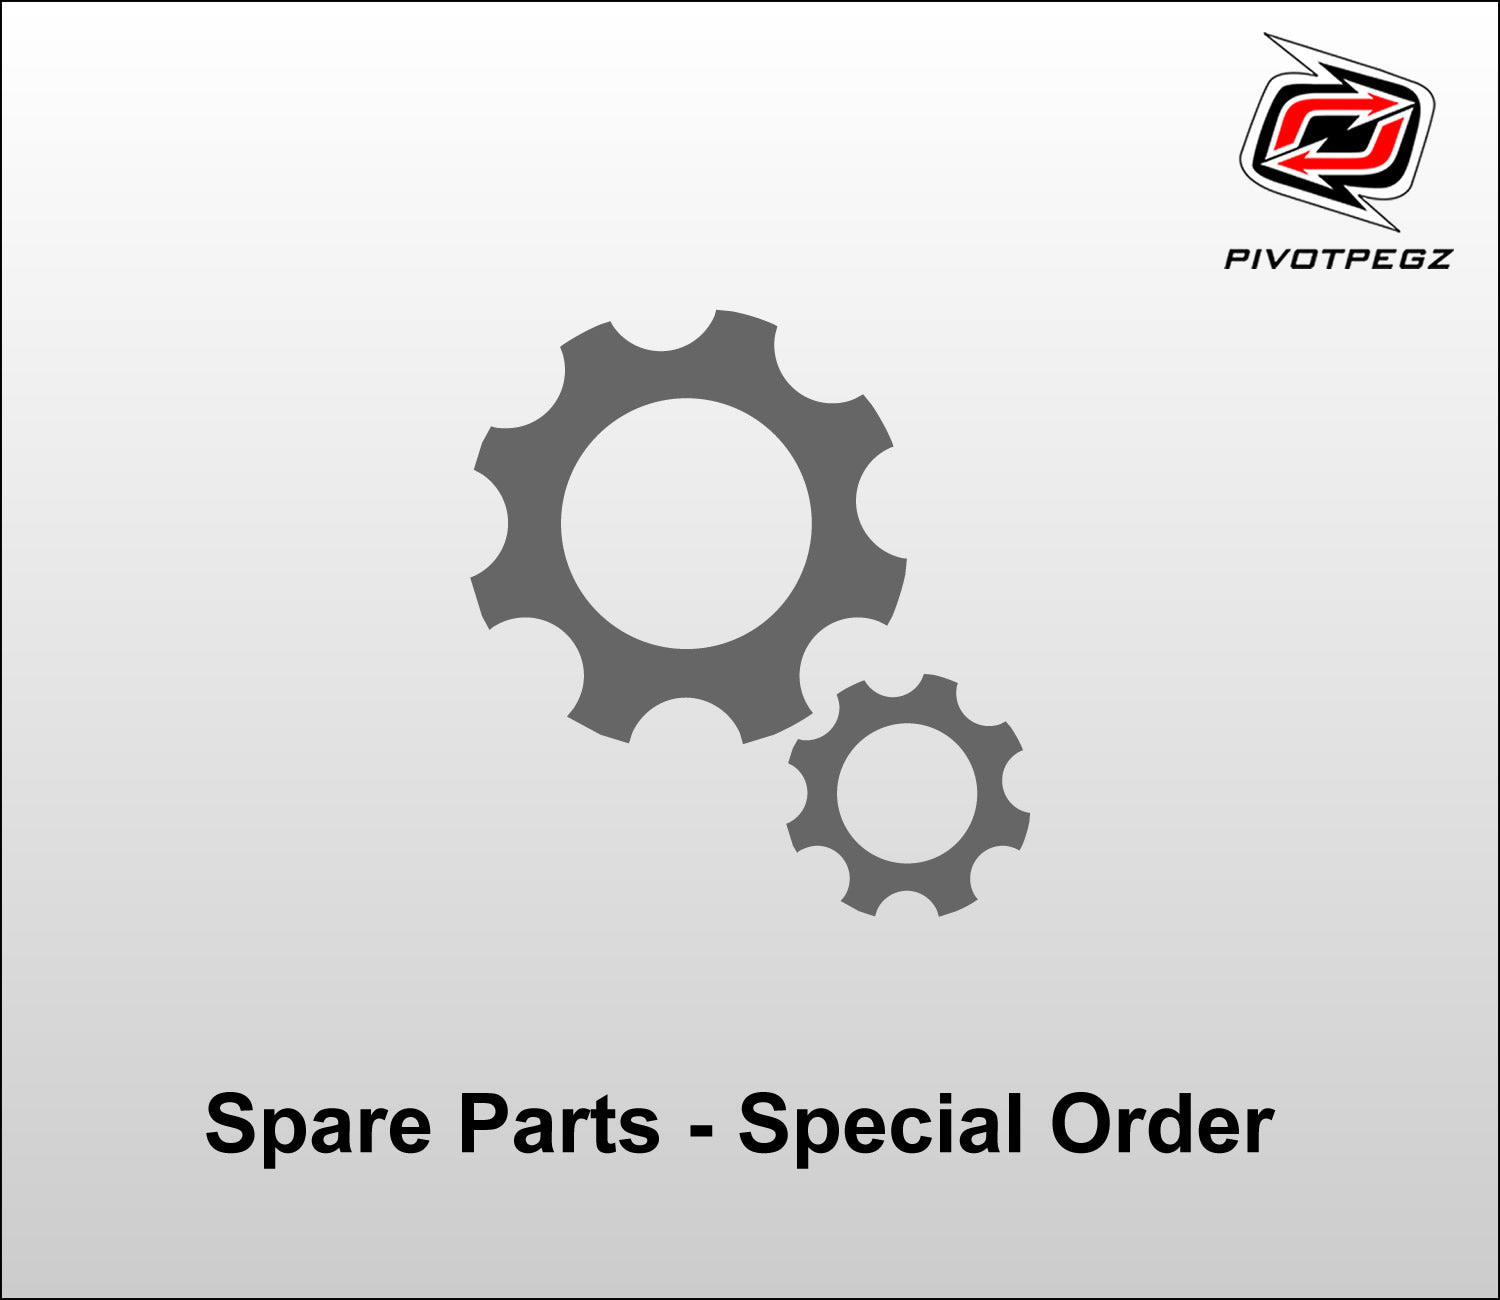 Spare Parts Special Order $50